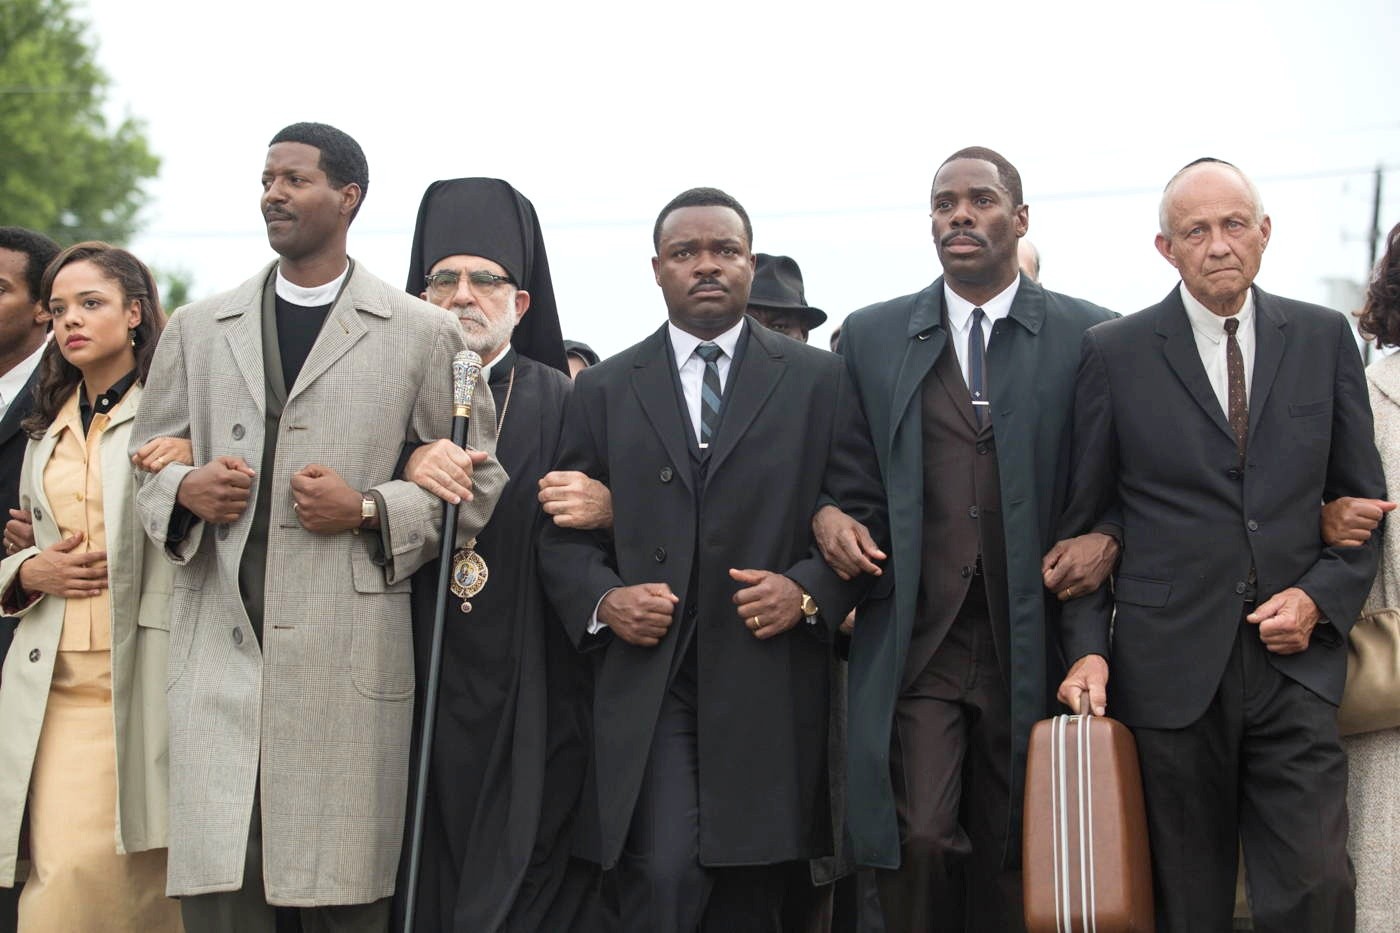 Tessa Thompson, Colman Domingo, David Oyelowo and Corey Reynolds in Paramount Pictures' Selma (2014)